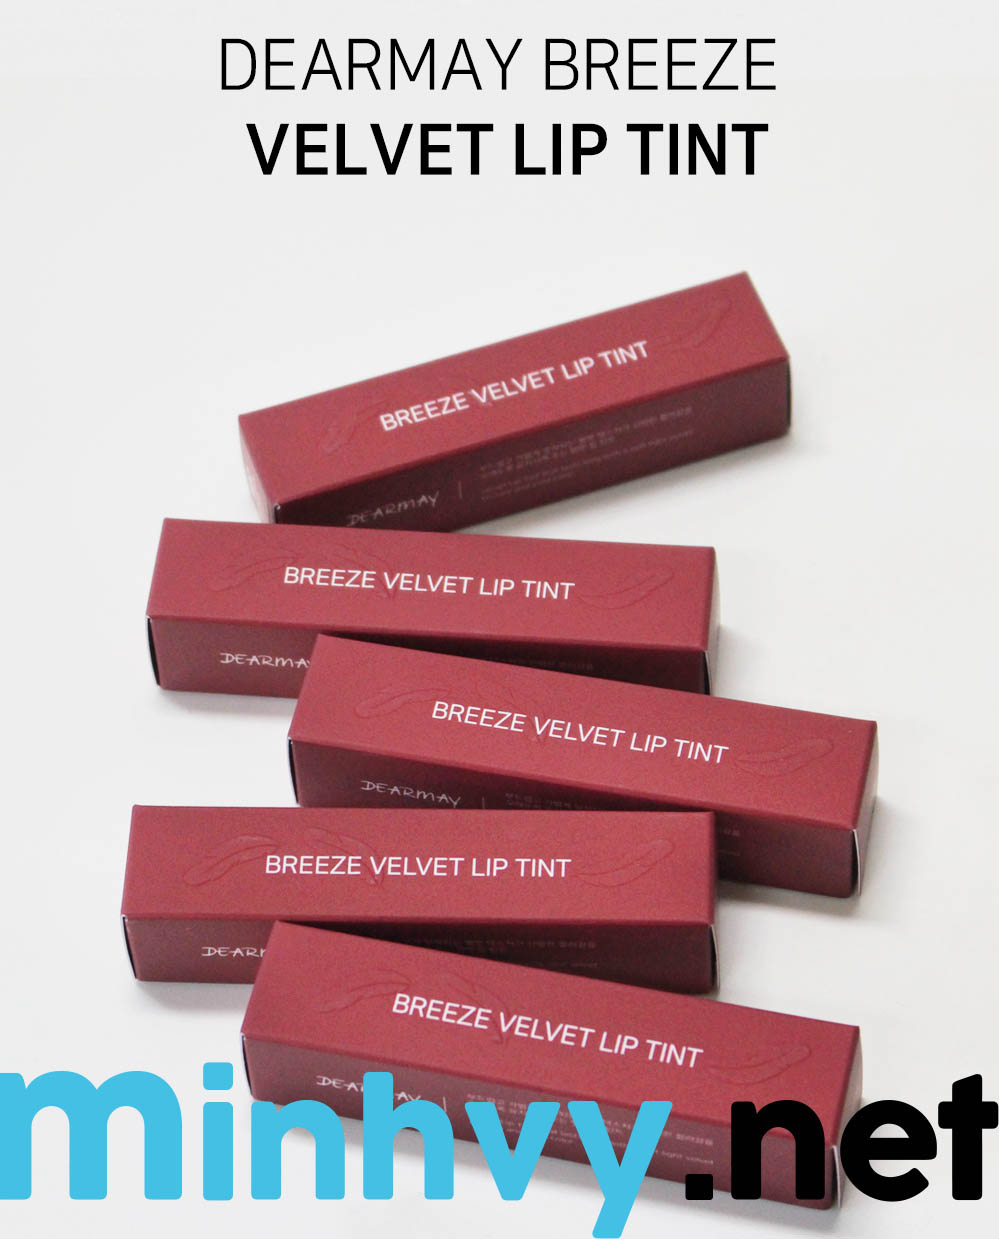 Review son Dearmay Breeze Velvet Lip Tint